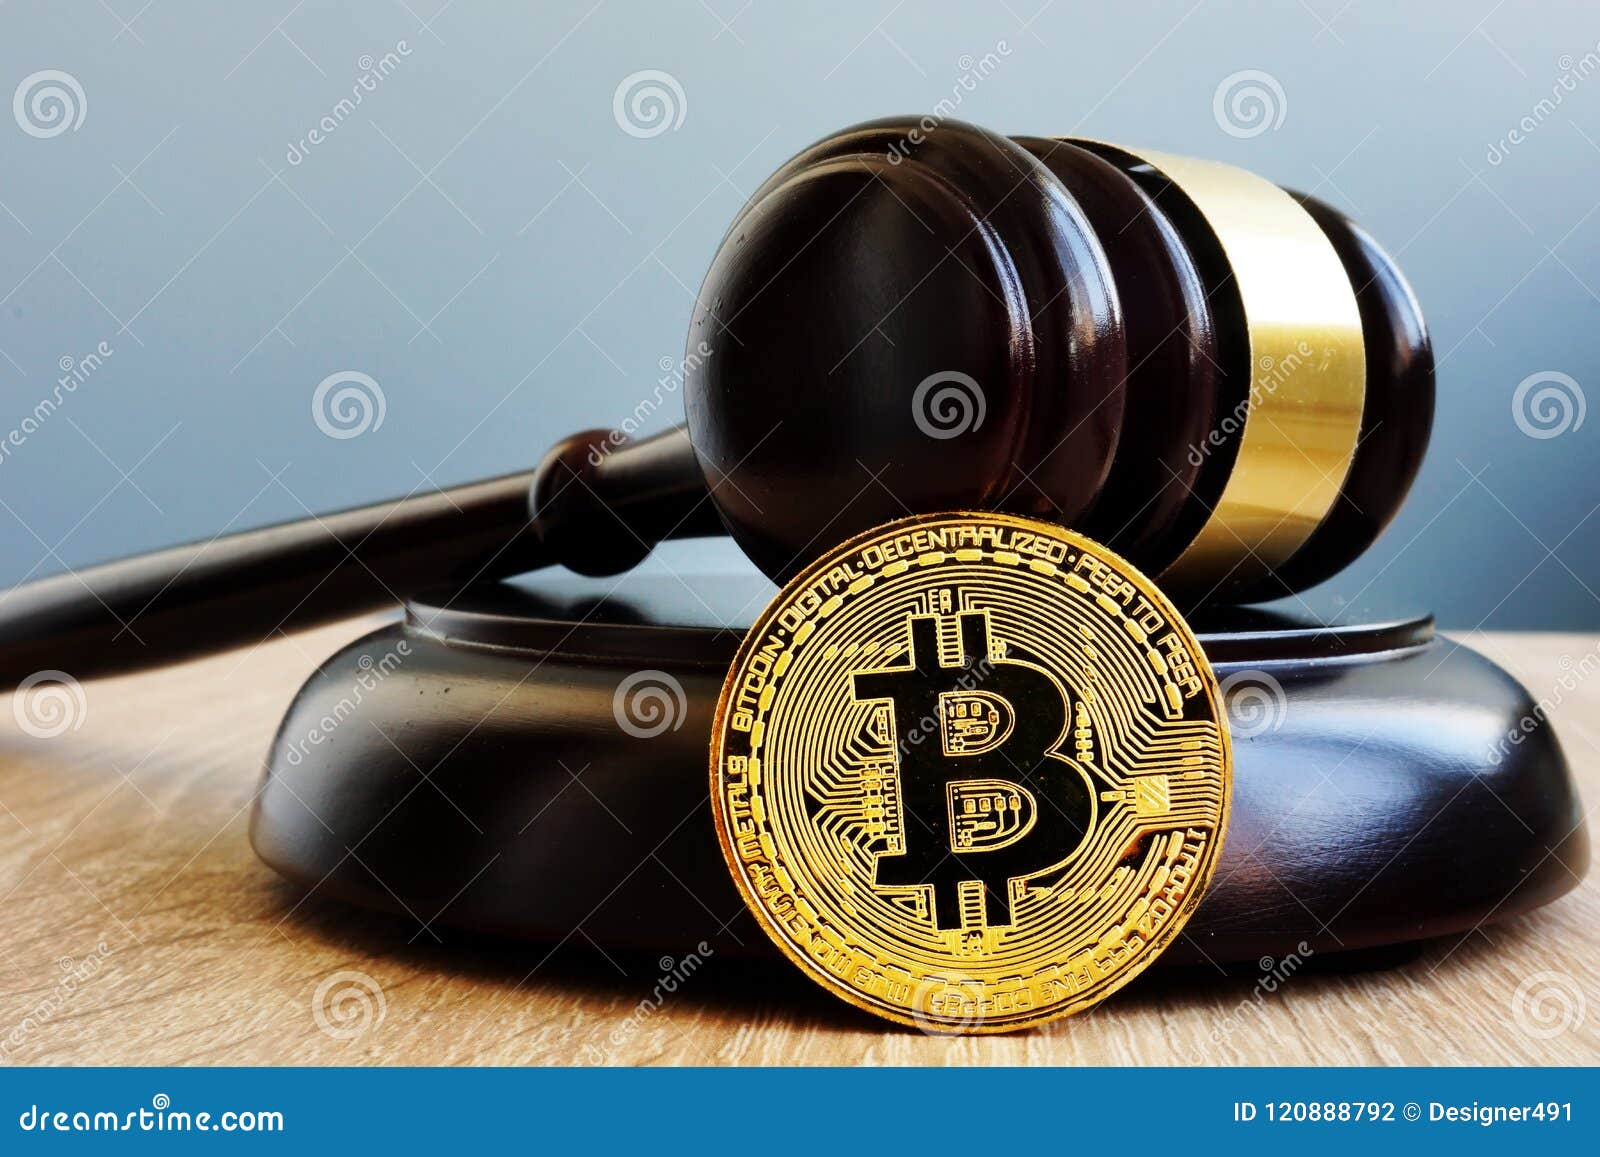 crypto regulation. gavel and cryptocurrency btc bitcoin.